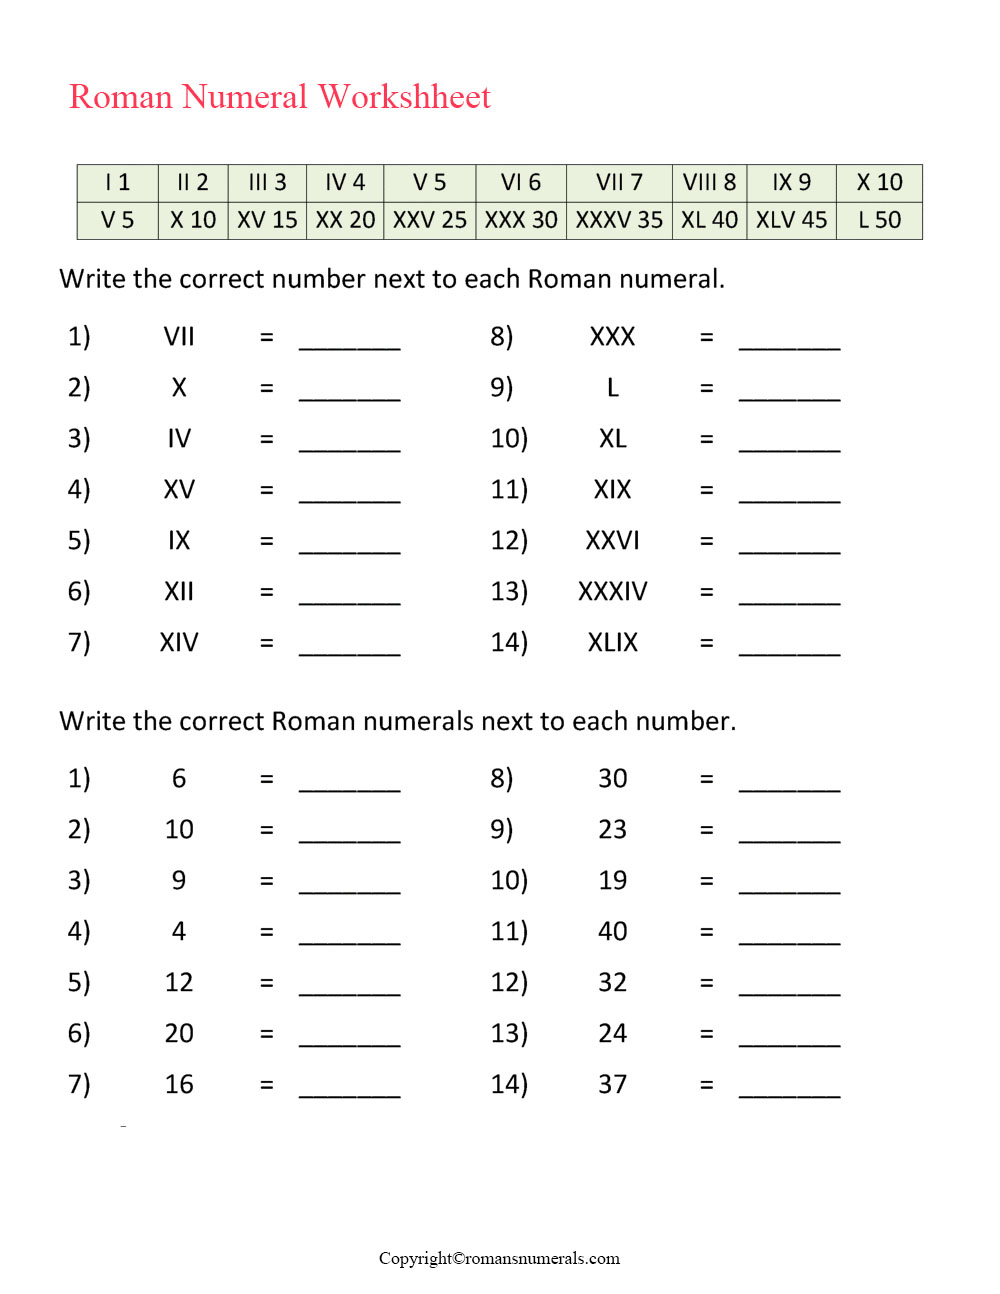 Roman Numerals Worksheet For Kids Printable In PDF